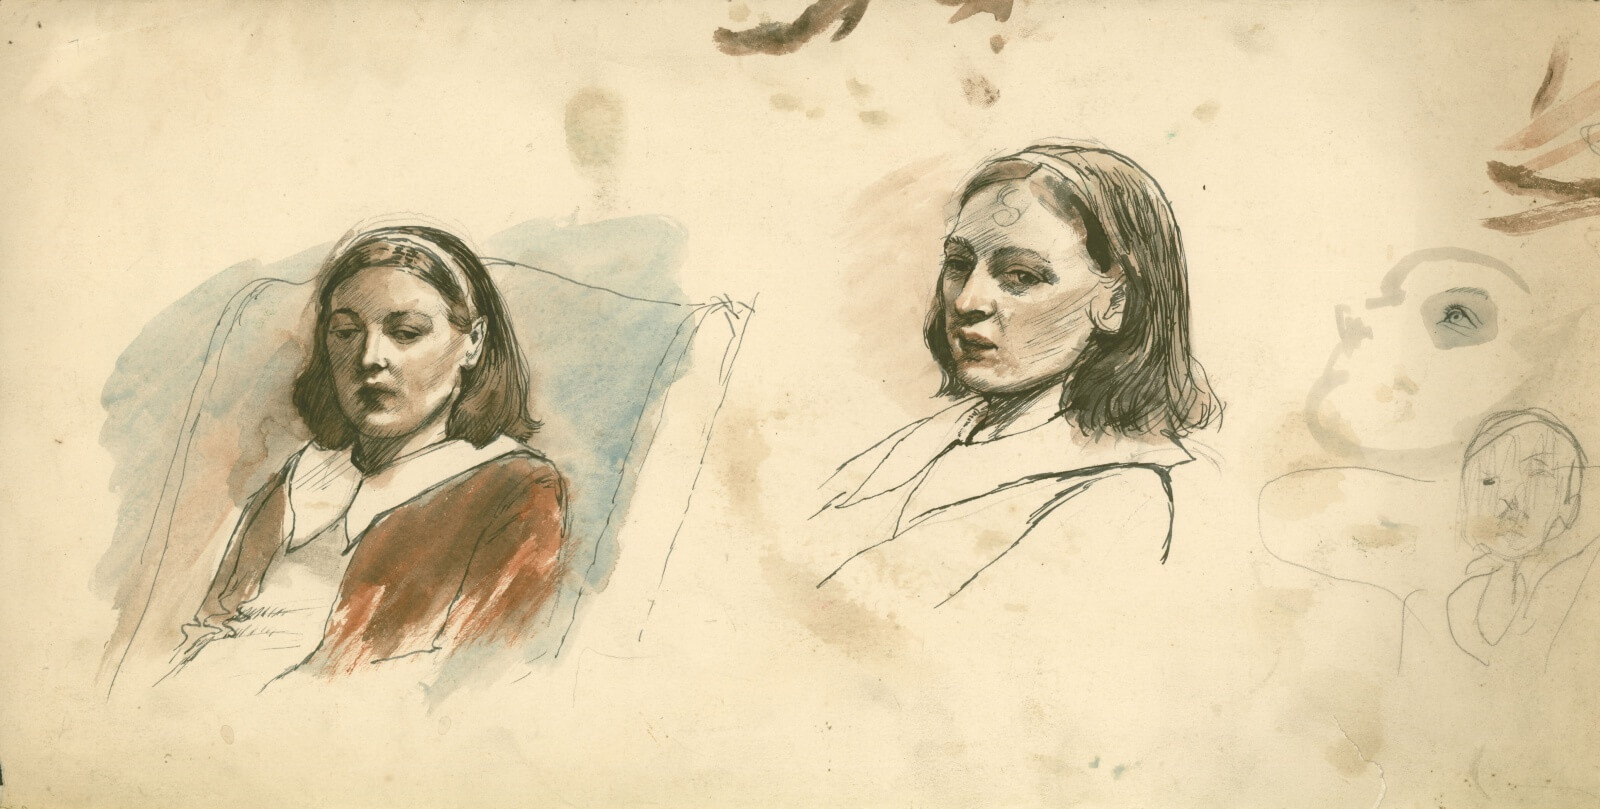 Evelyn Dunbar - Portrait studies of the artist's sister